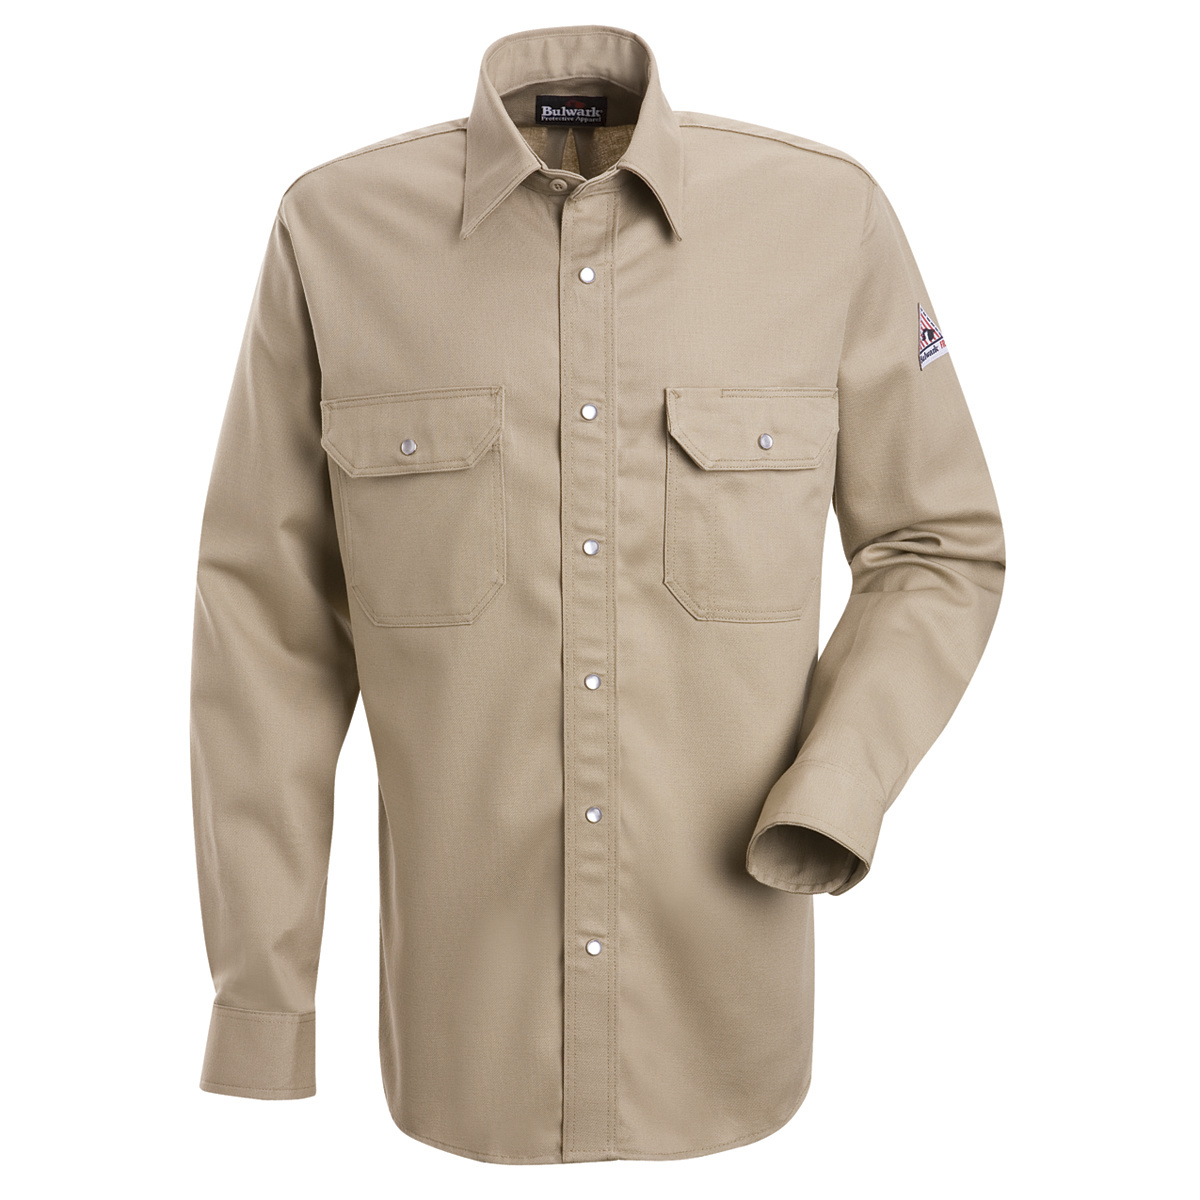 Bulwark® Medium Regular Tan EXCEL FR® Cotton Flame Resistant Uniform Shirt With Snap Front Closure